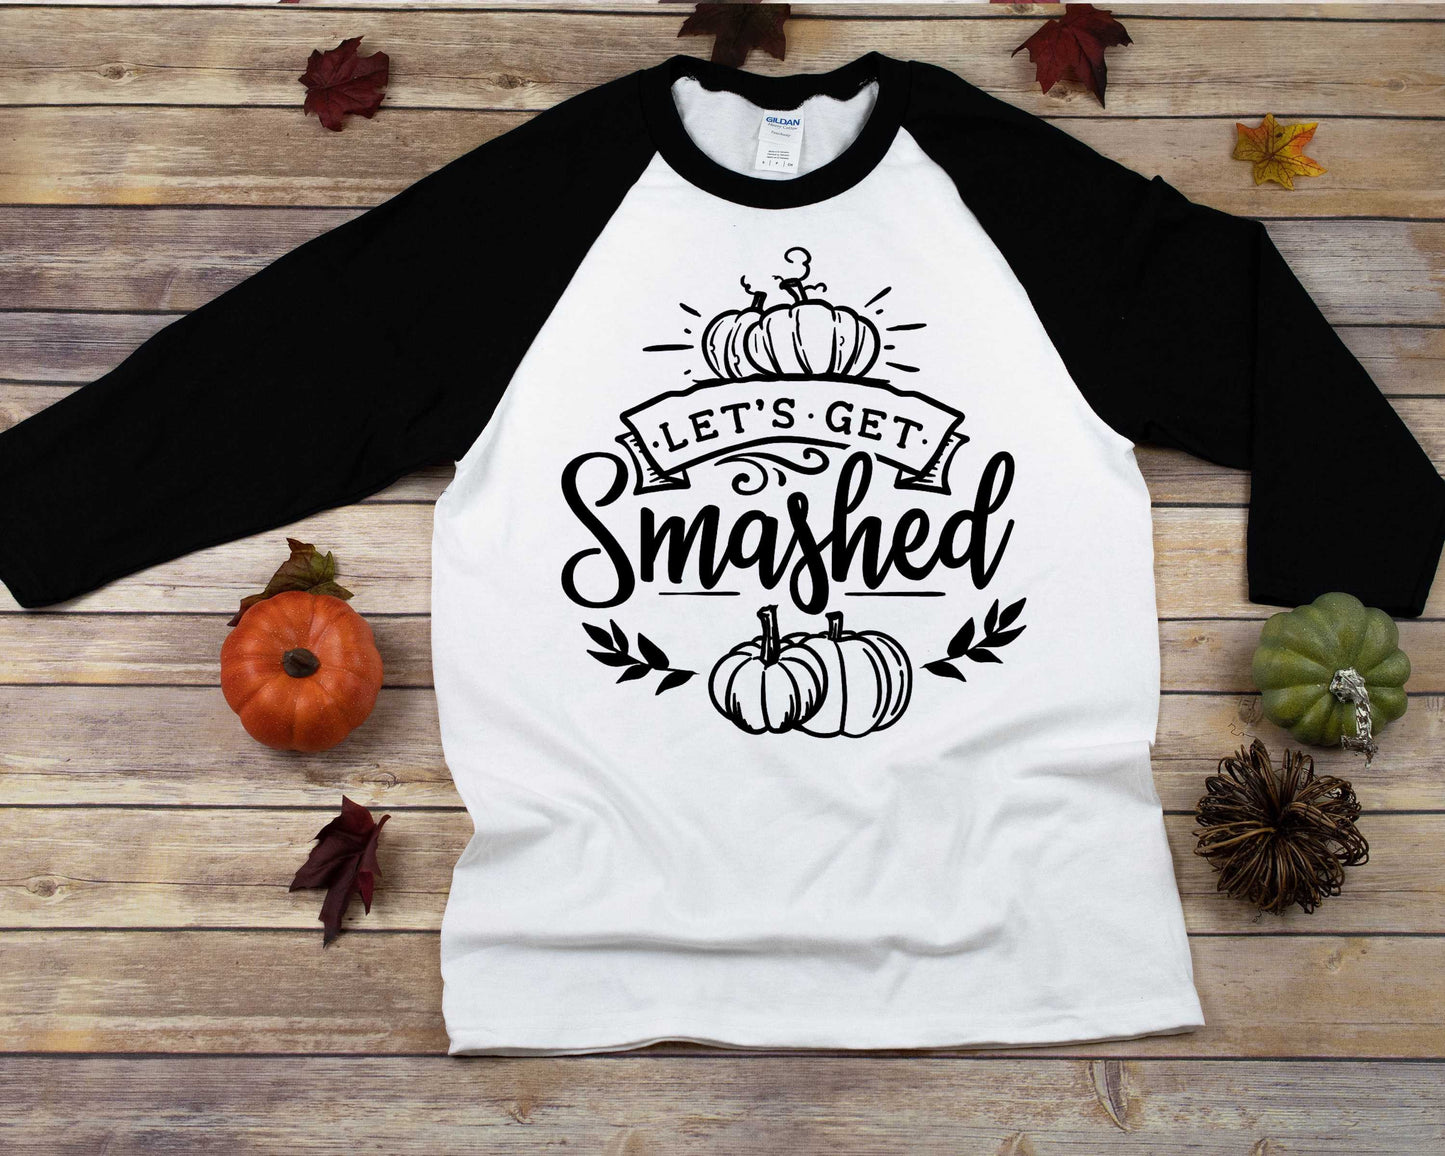 Let's Get Smashed Women's raglan t-shirt - women's fall shirt - autumn shirt - fall shirt - smashed shirt - pumpkin shirt